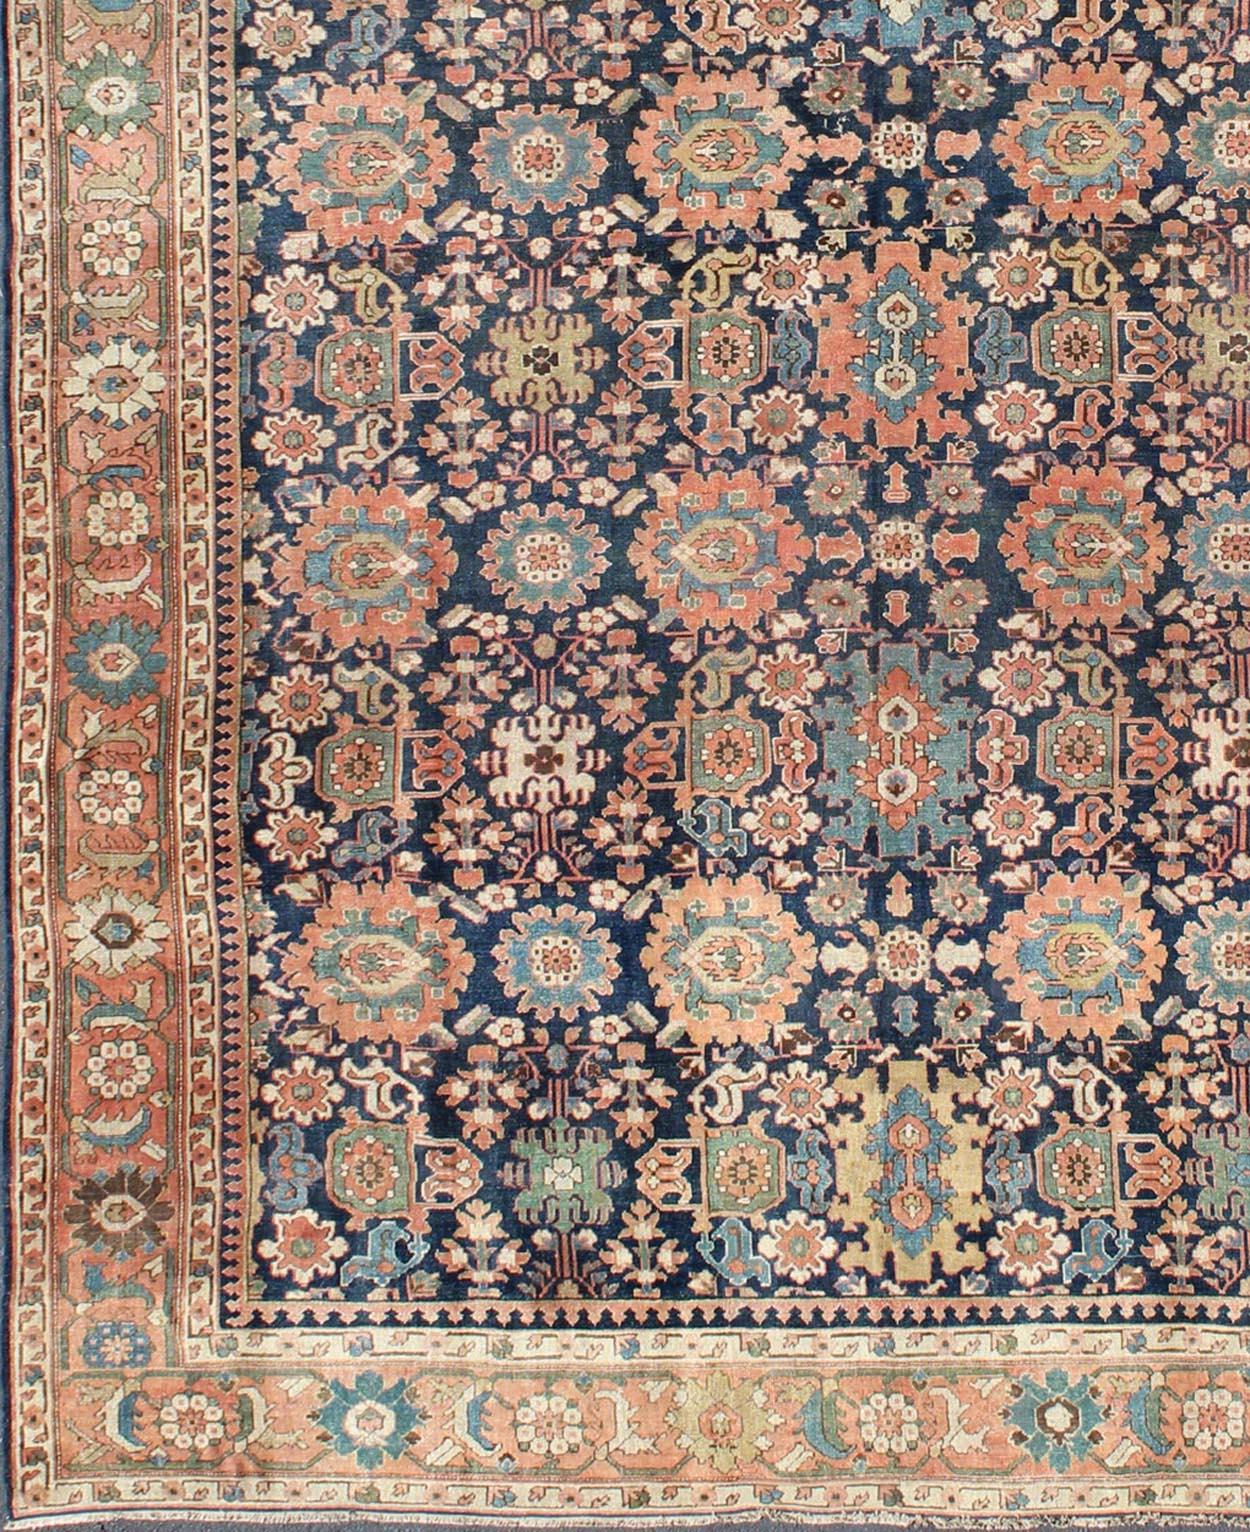 Mansion size antique Persian Hamedan rug in large scale sub geometric  blossom design, rug EMA-7511, country of origin / type: Iran / Hamedan, circa 1900.

Measures: 14'3 x 22'7

This beautiful antique early 20th century Persian Hamedan carpet